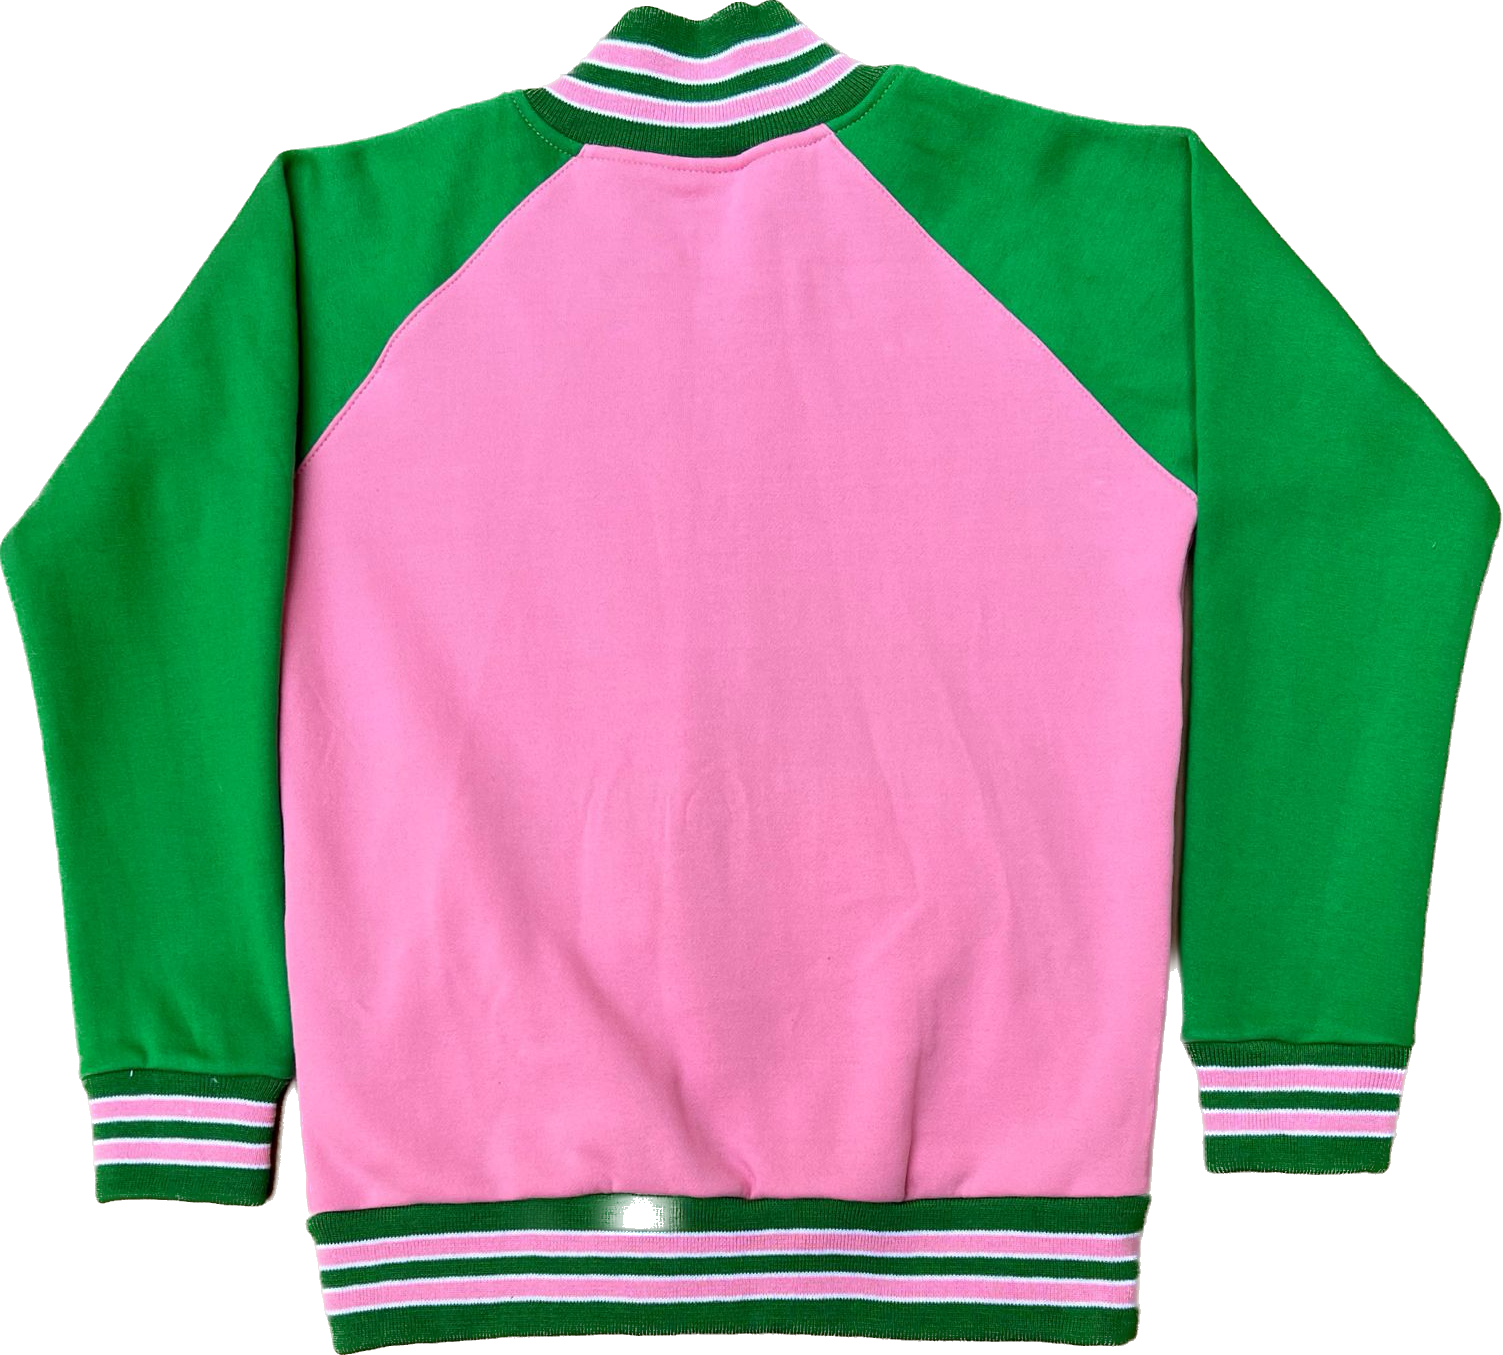 AKA Pink Fleece Letterman Jacket (Unisex Size)